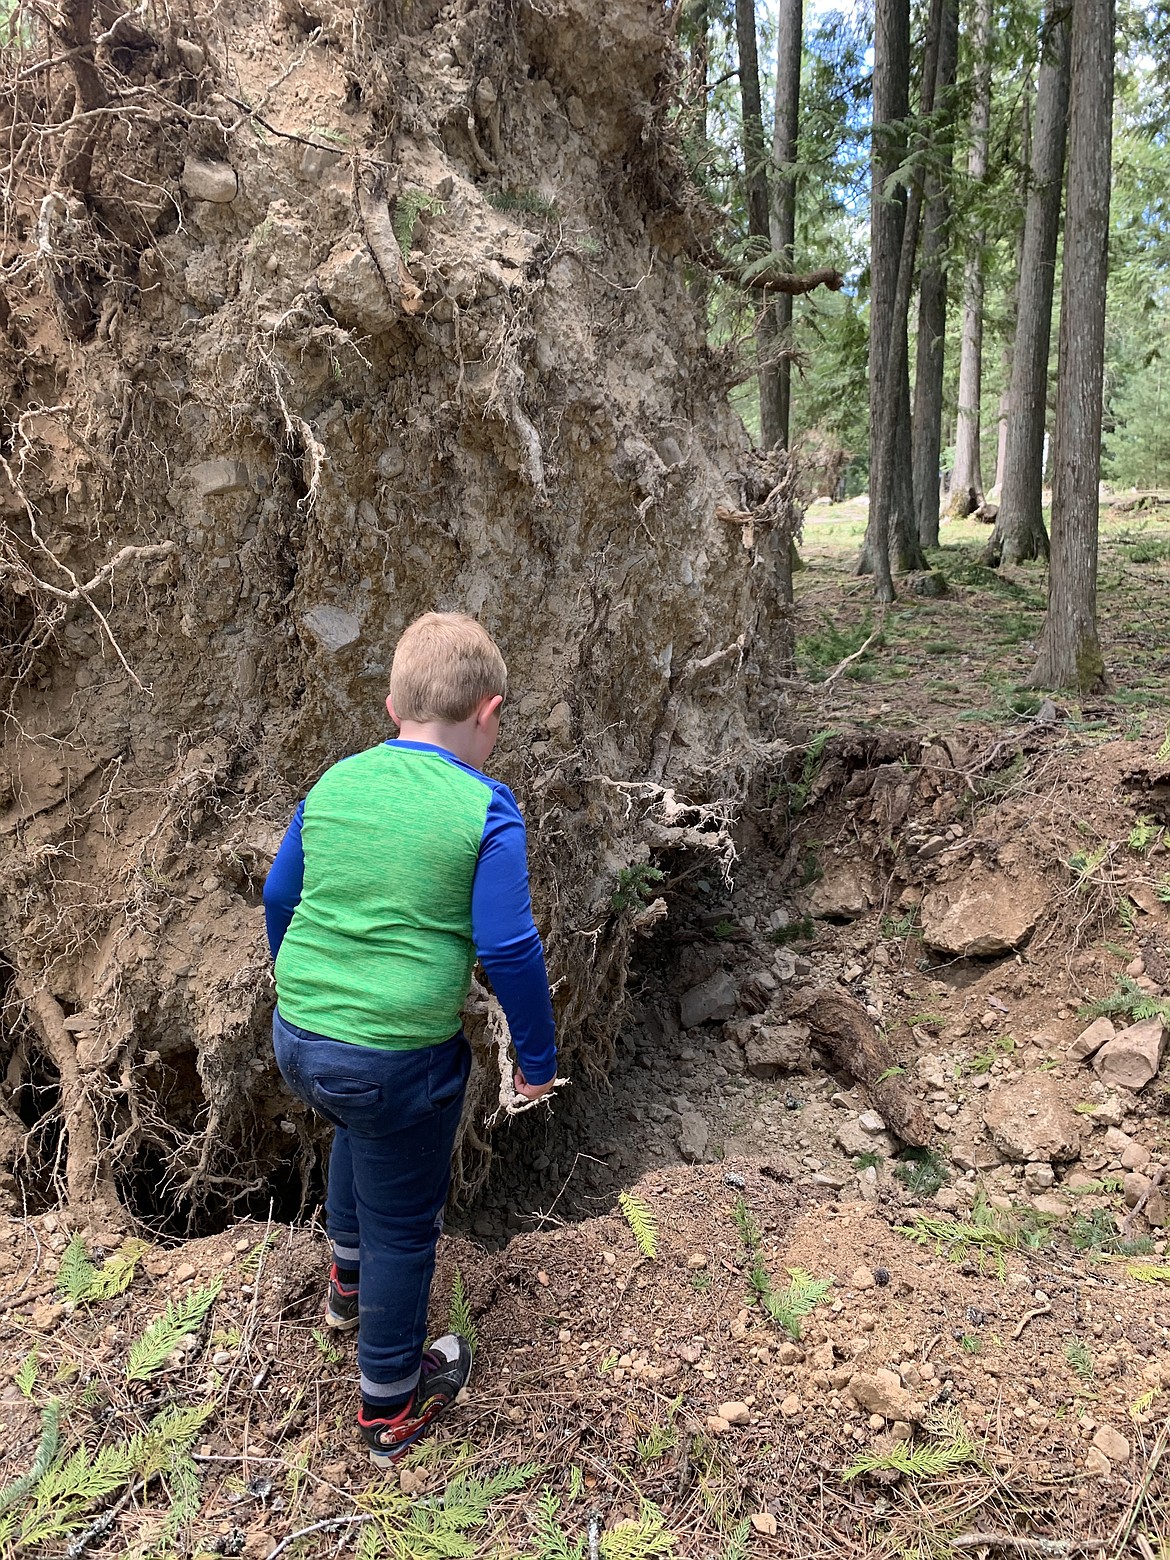 Mason Main looks down into a large hole where a tree once stood. He said "the ground opened up!"